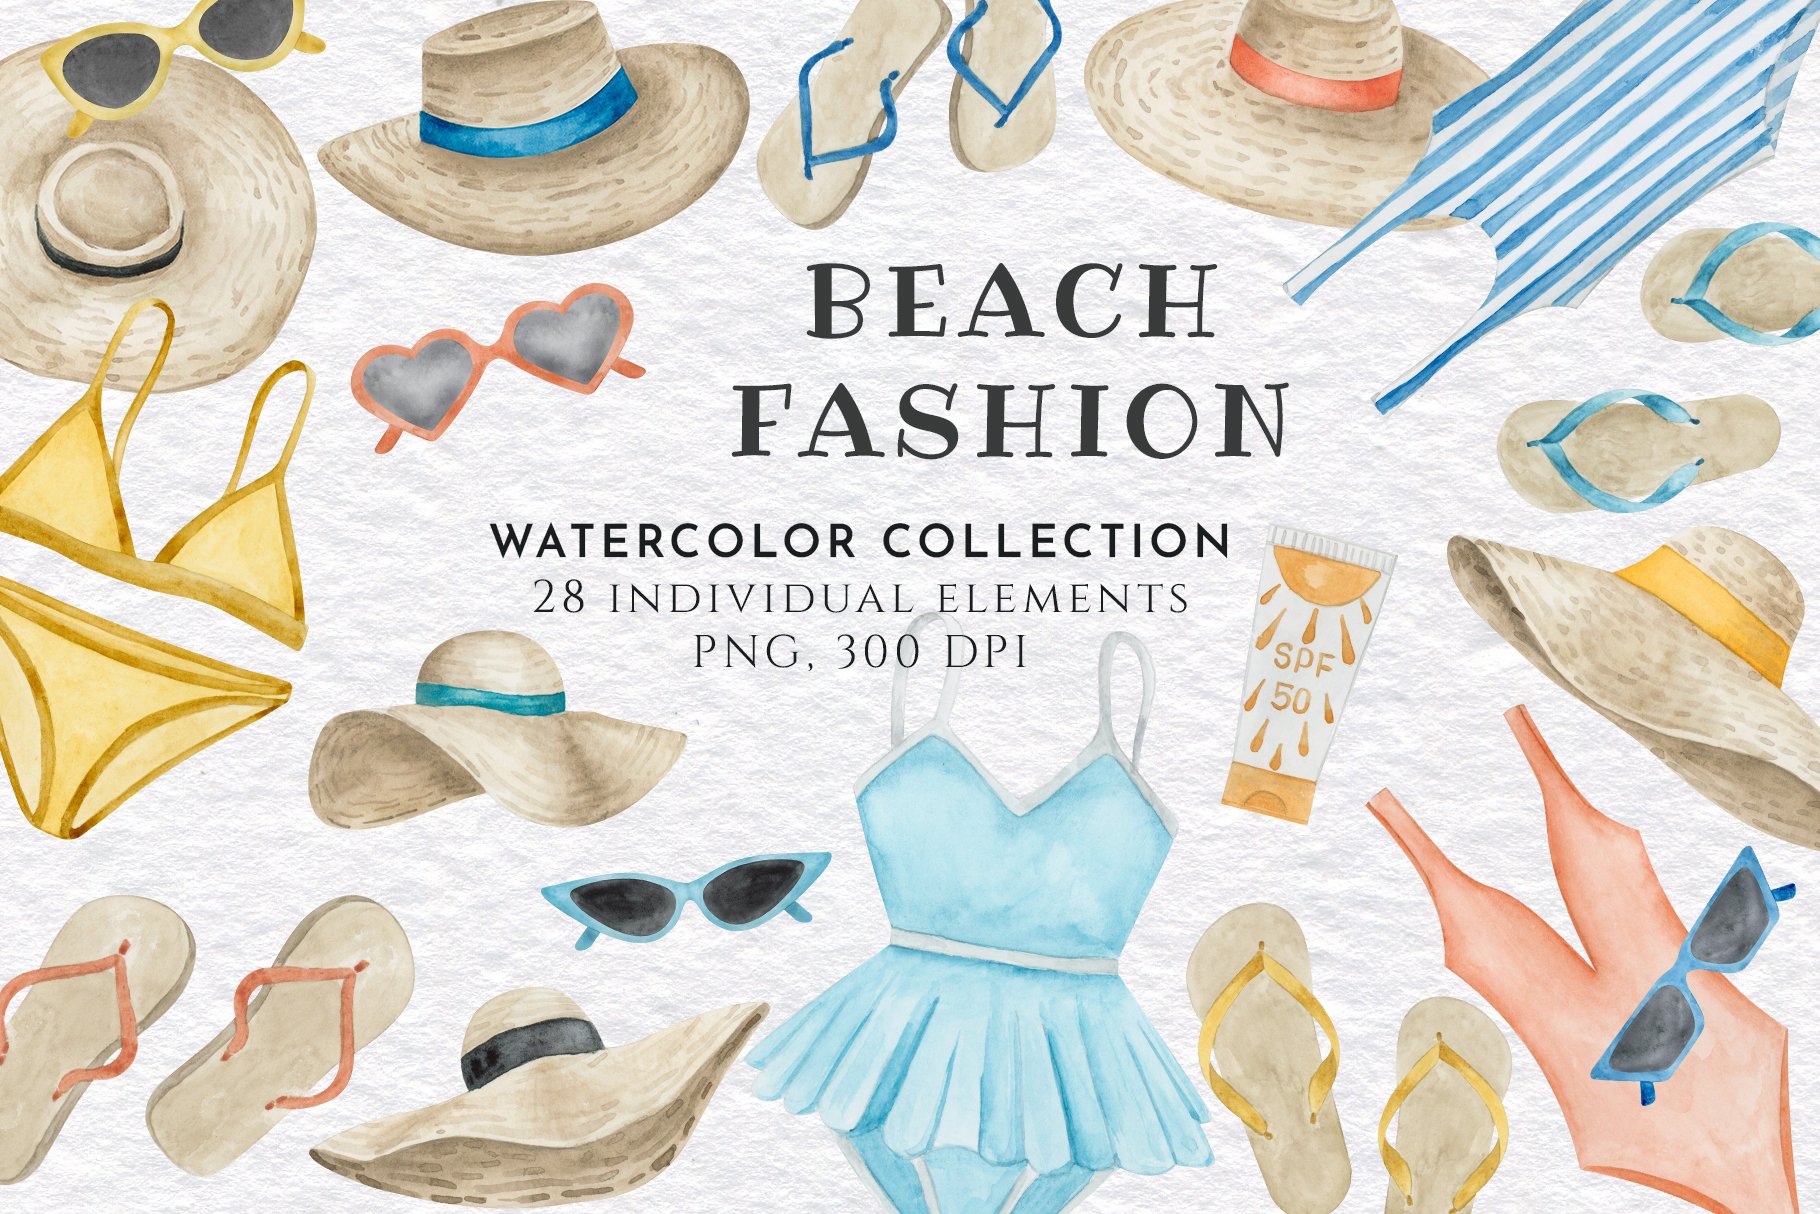 Watercolor Beach Fashion Clipart cover image.